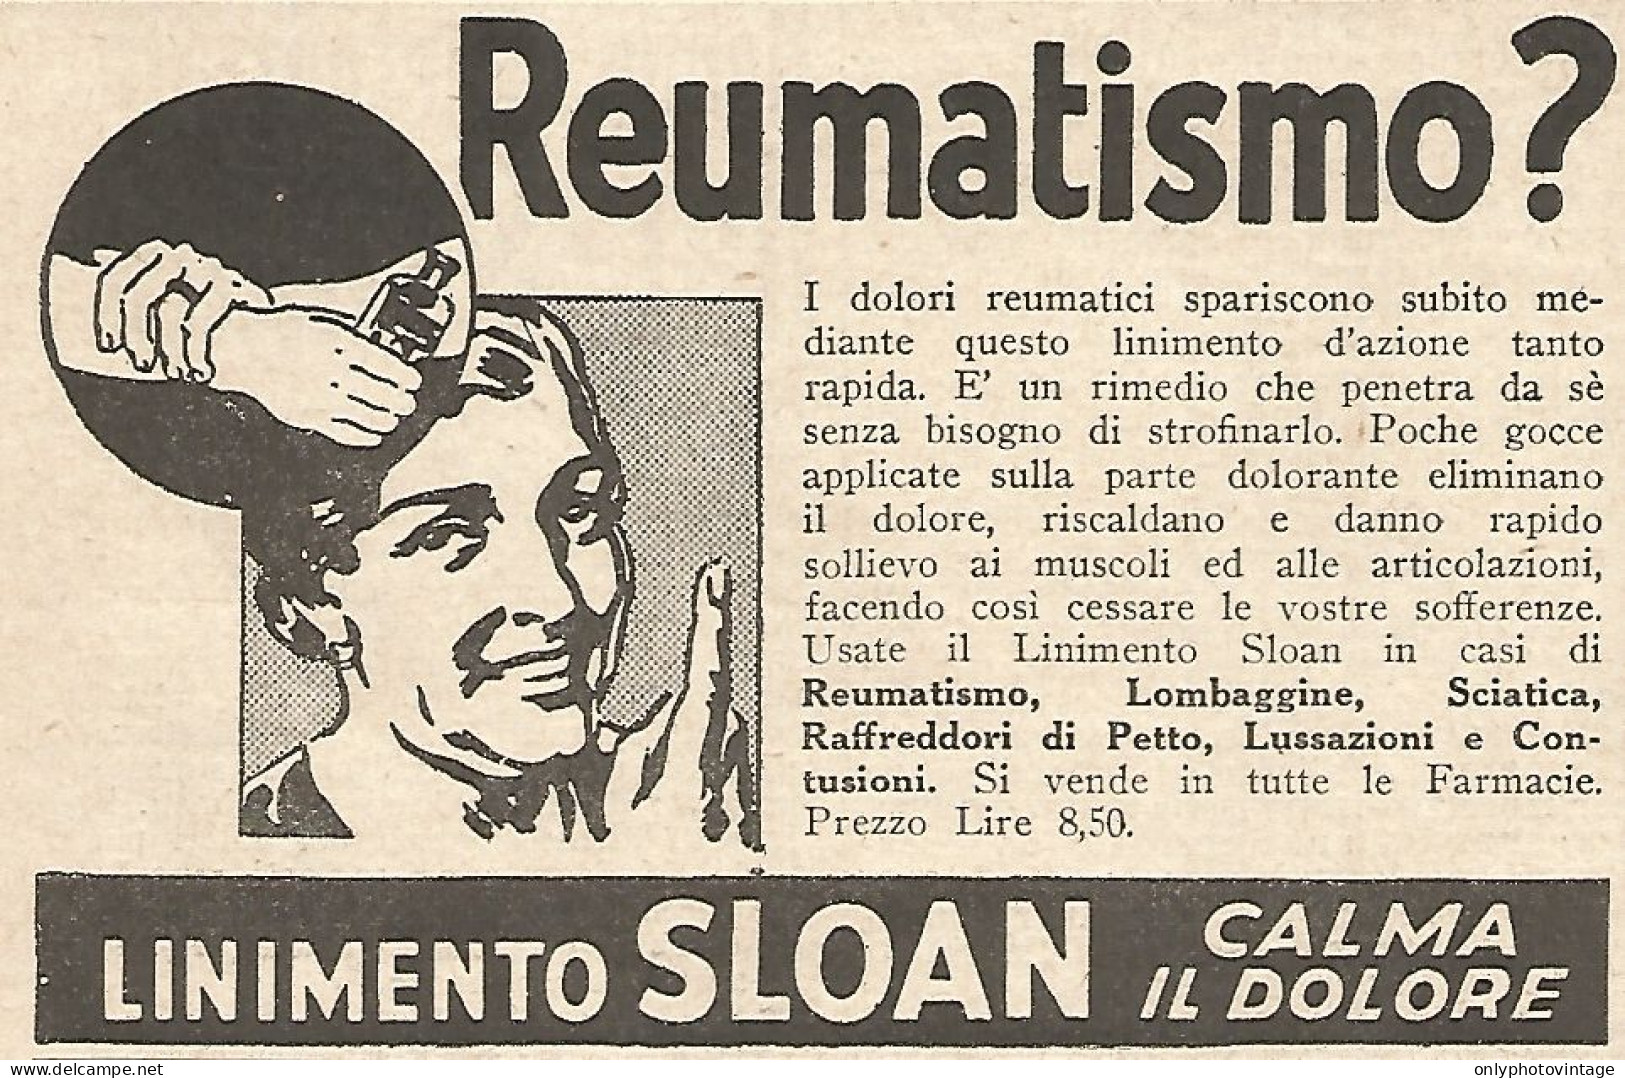 Reumatismo ? - Linimento SLOAN - Pubblicitï¿½ Del 1932 - Old Advertising - Publicités